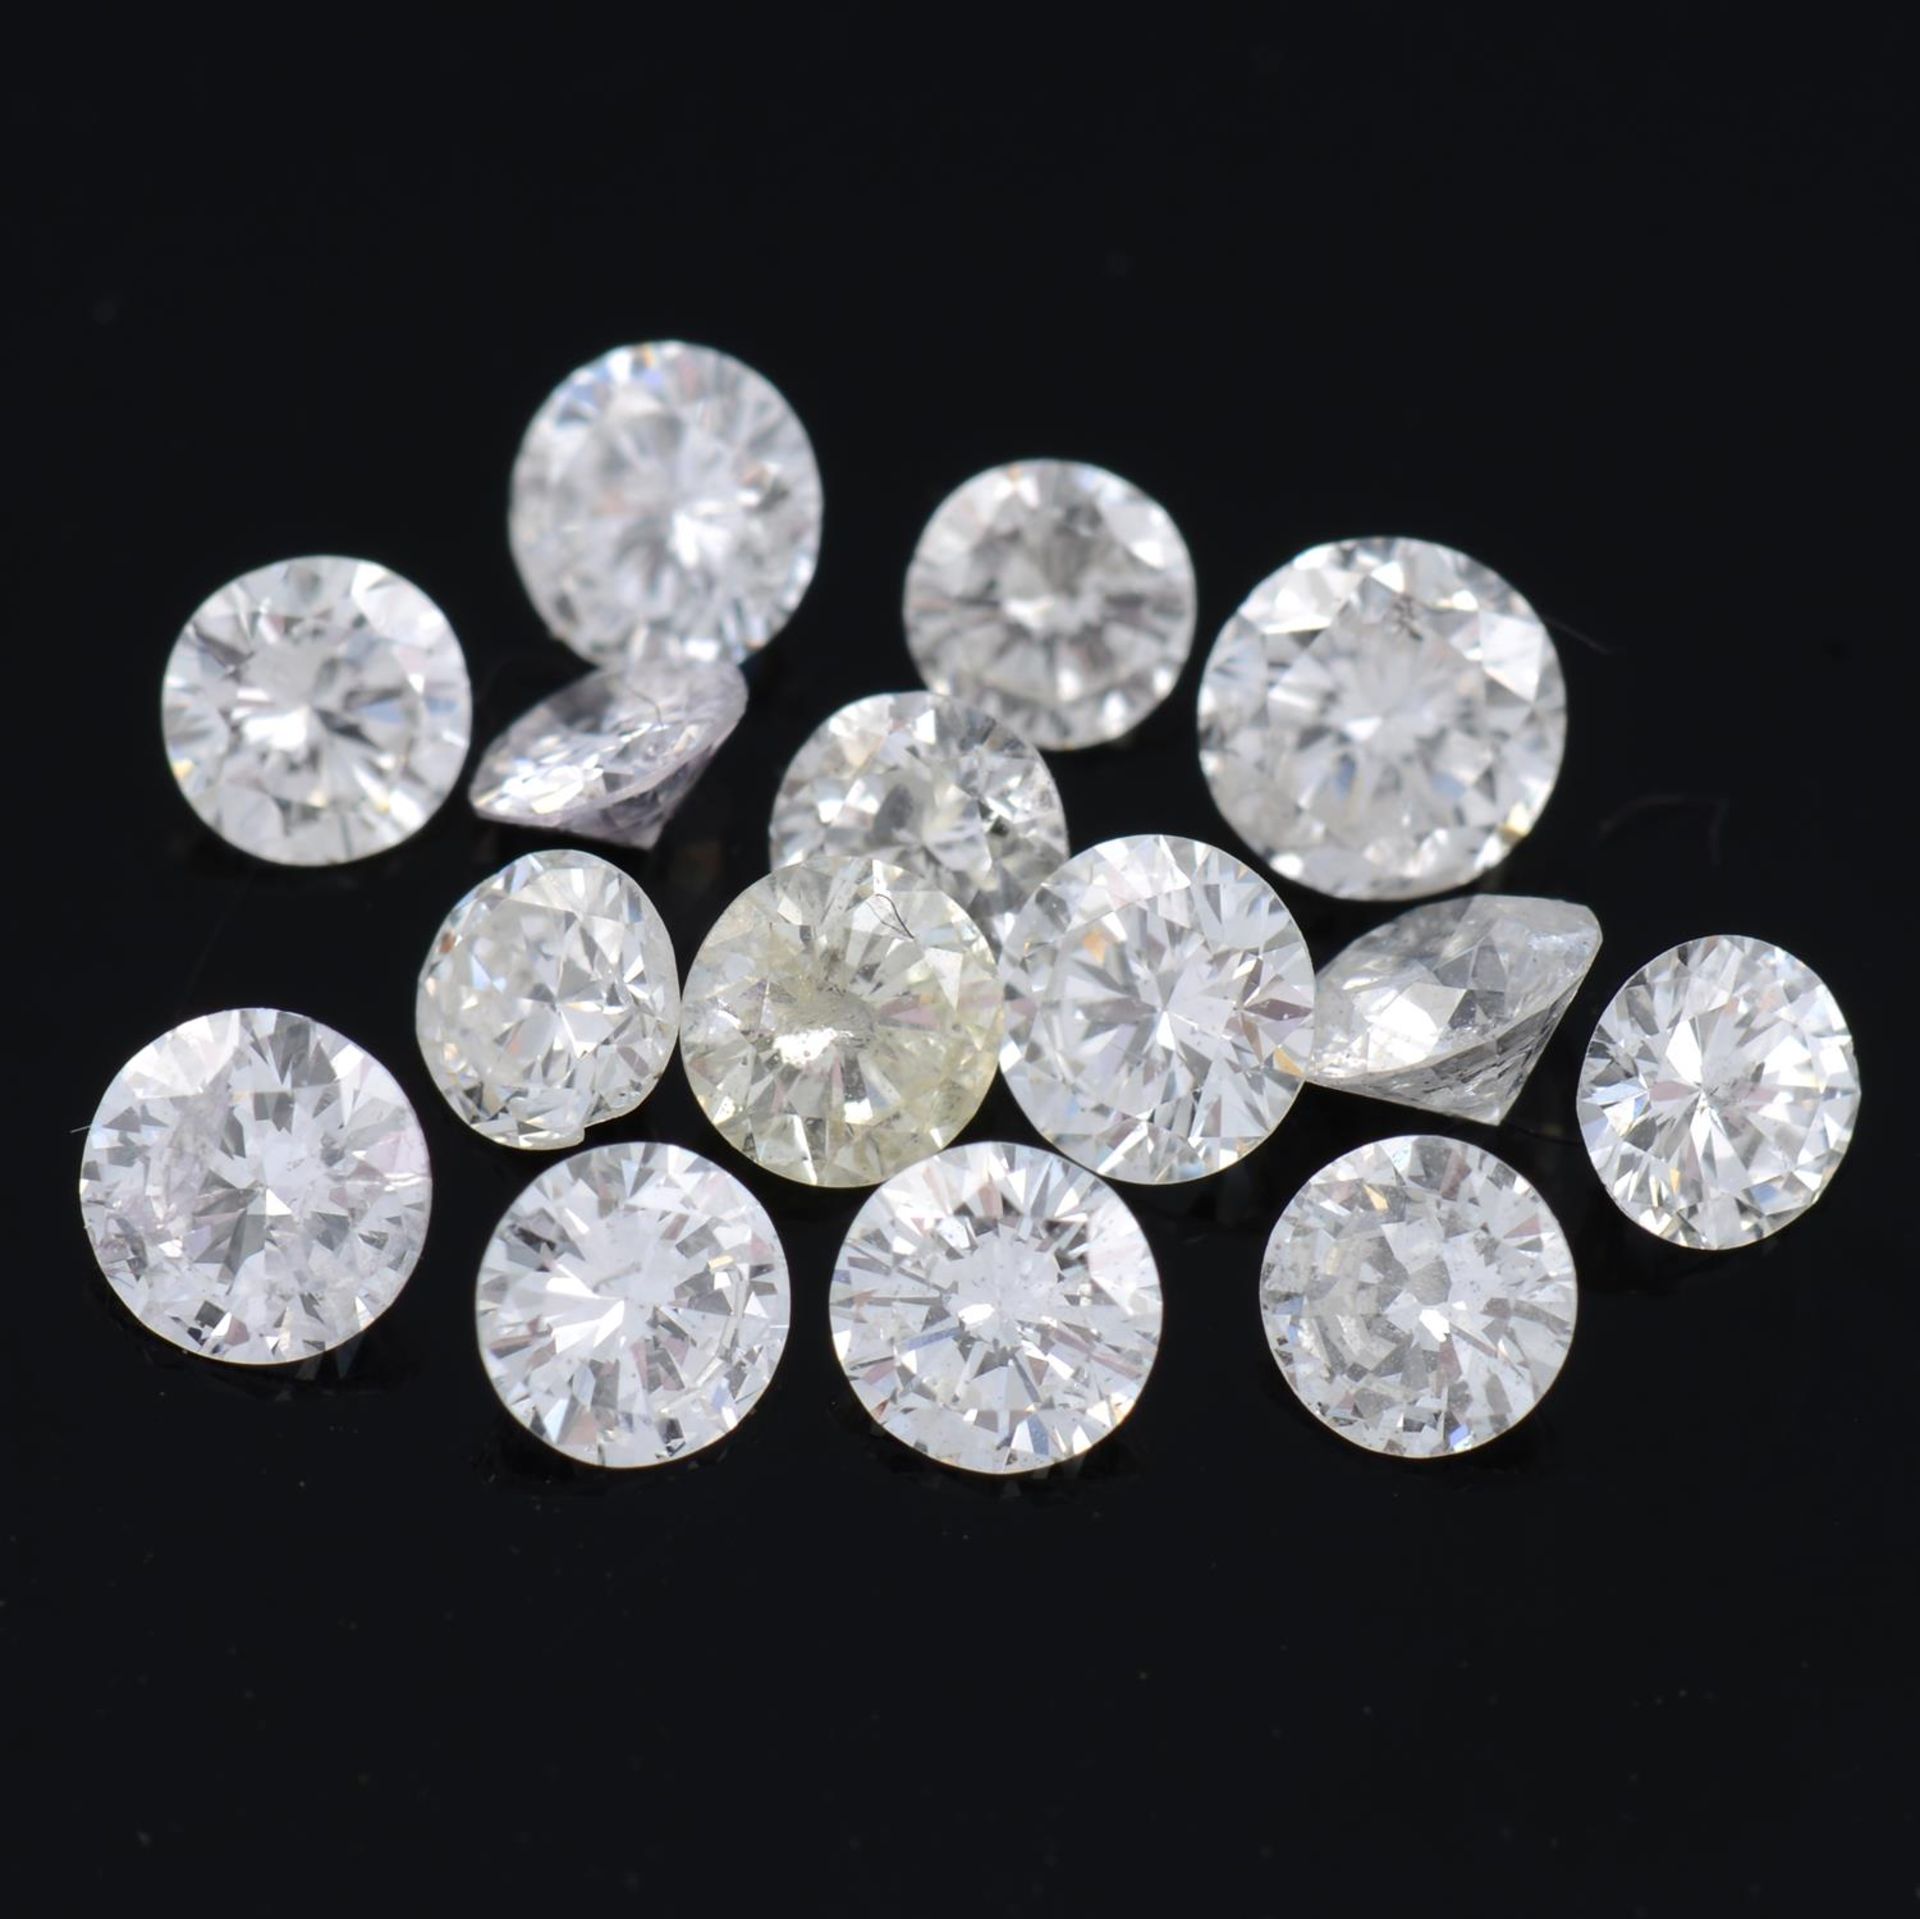 Brilliant-cut diamonds, 1.73ct